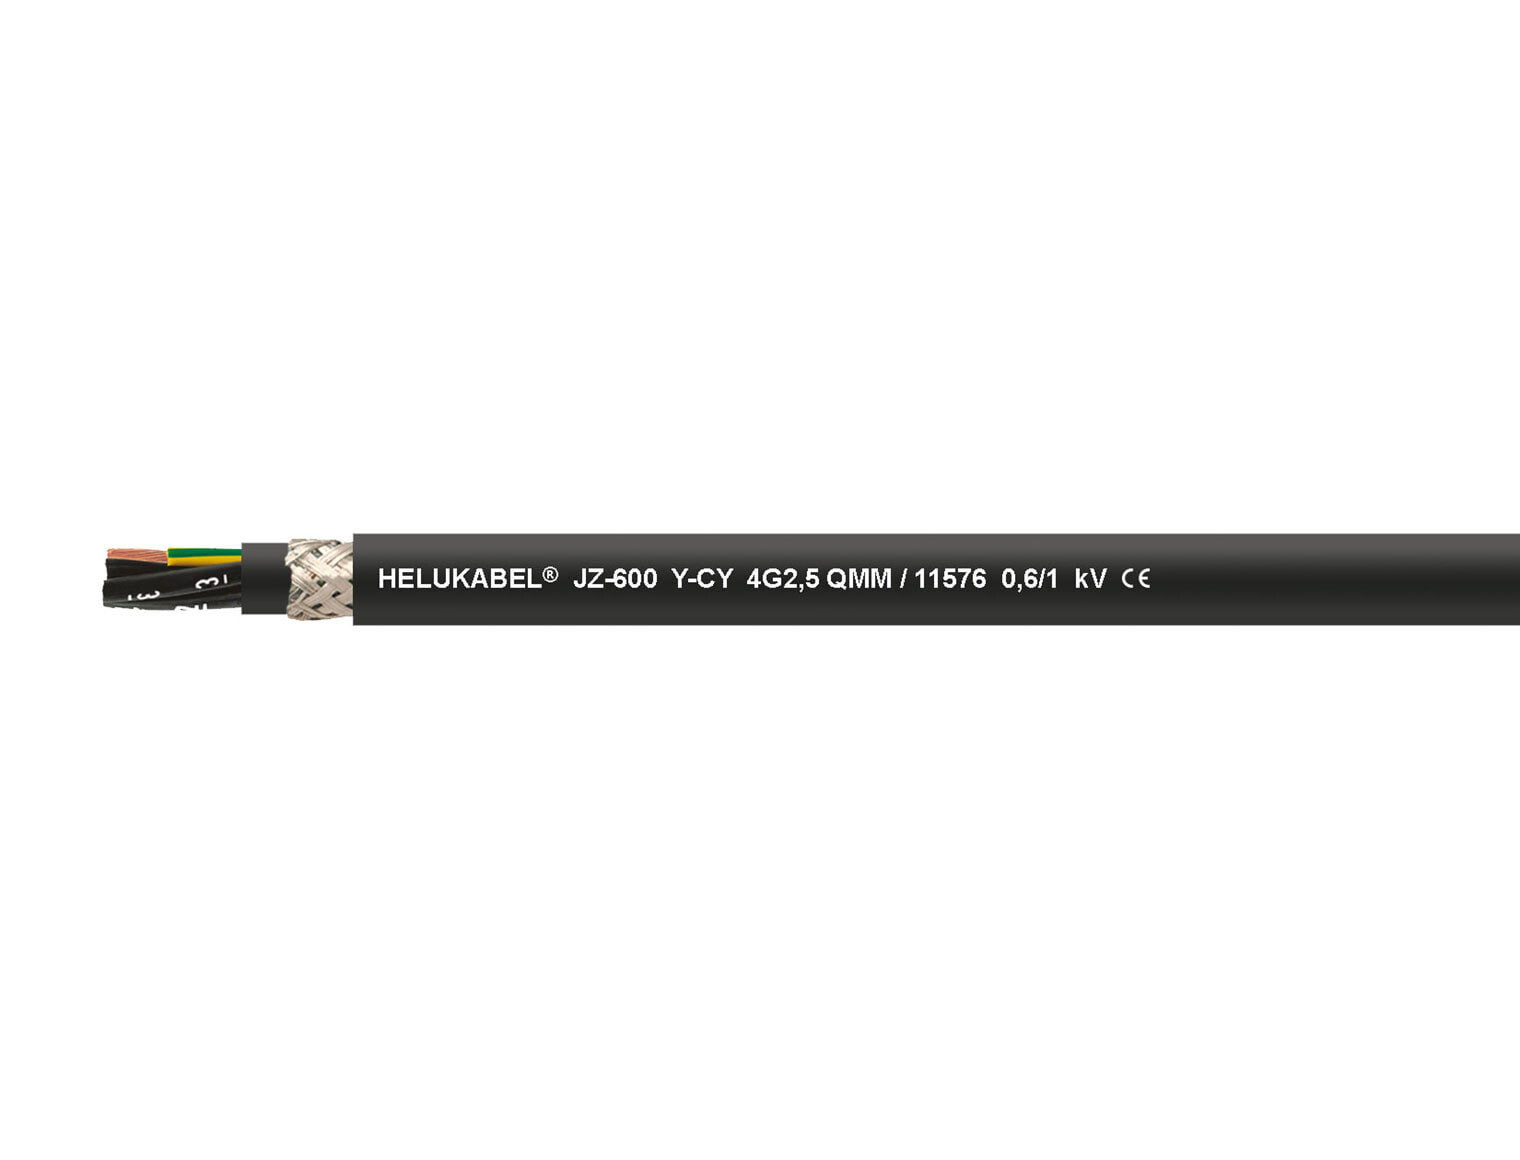 Helukabel OZ-600-Y-CY - Low voltage cable - Black - Polyvinyl chloride (PVC) - Polyvinyl chloride (PVC) - Cooper - 2x1,5 mm²